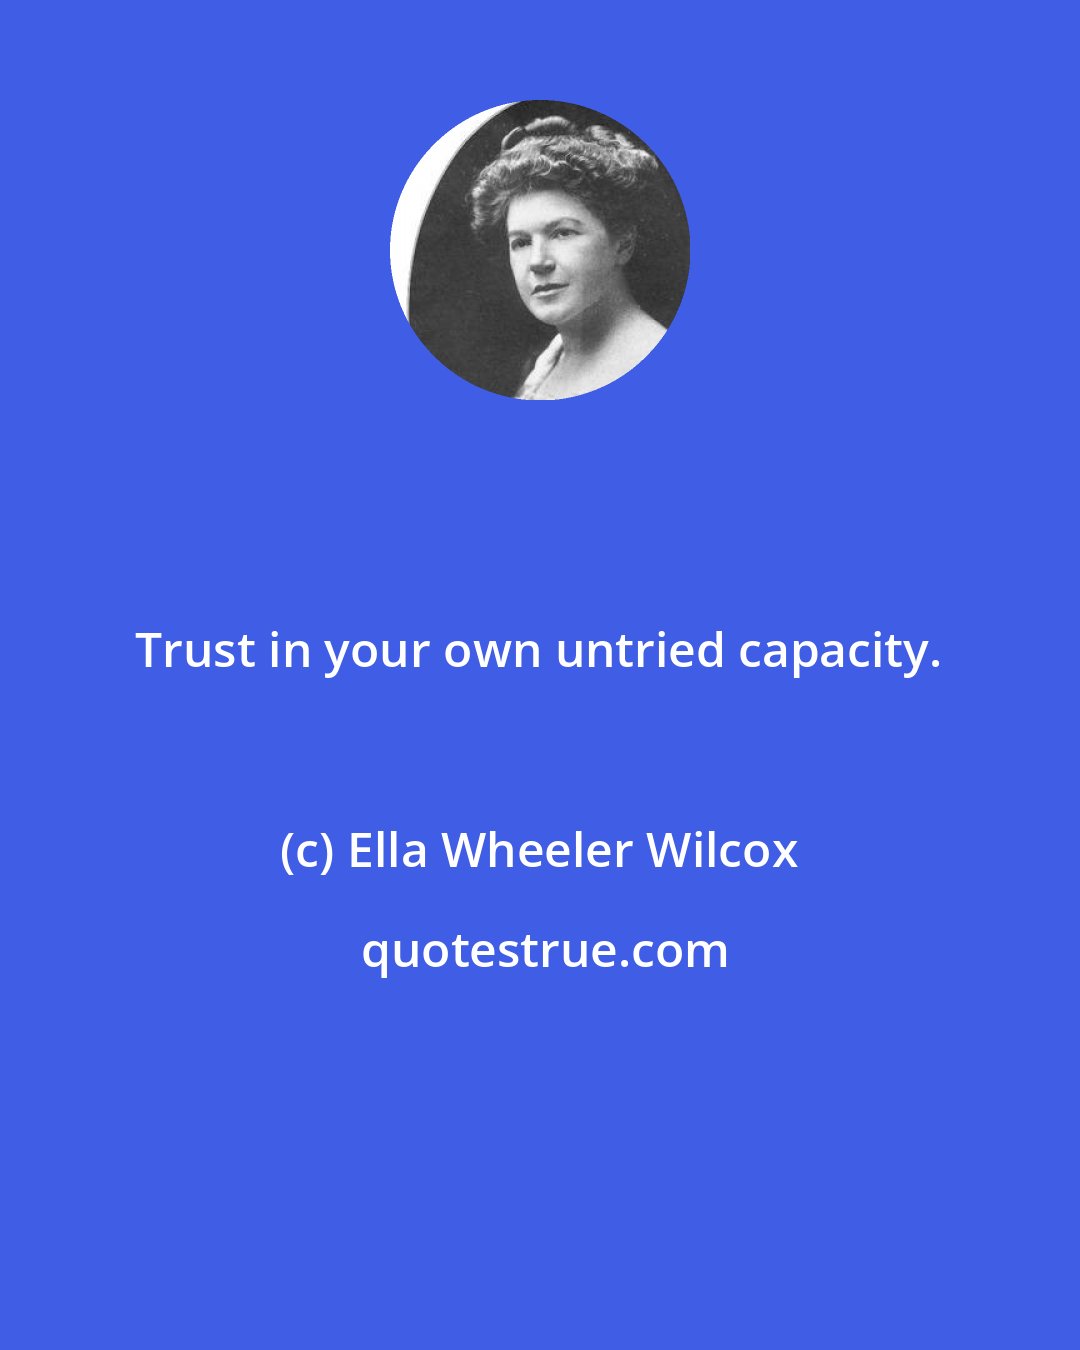 Ella Wheeler Wilcox: Trust in your own untried capacity.